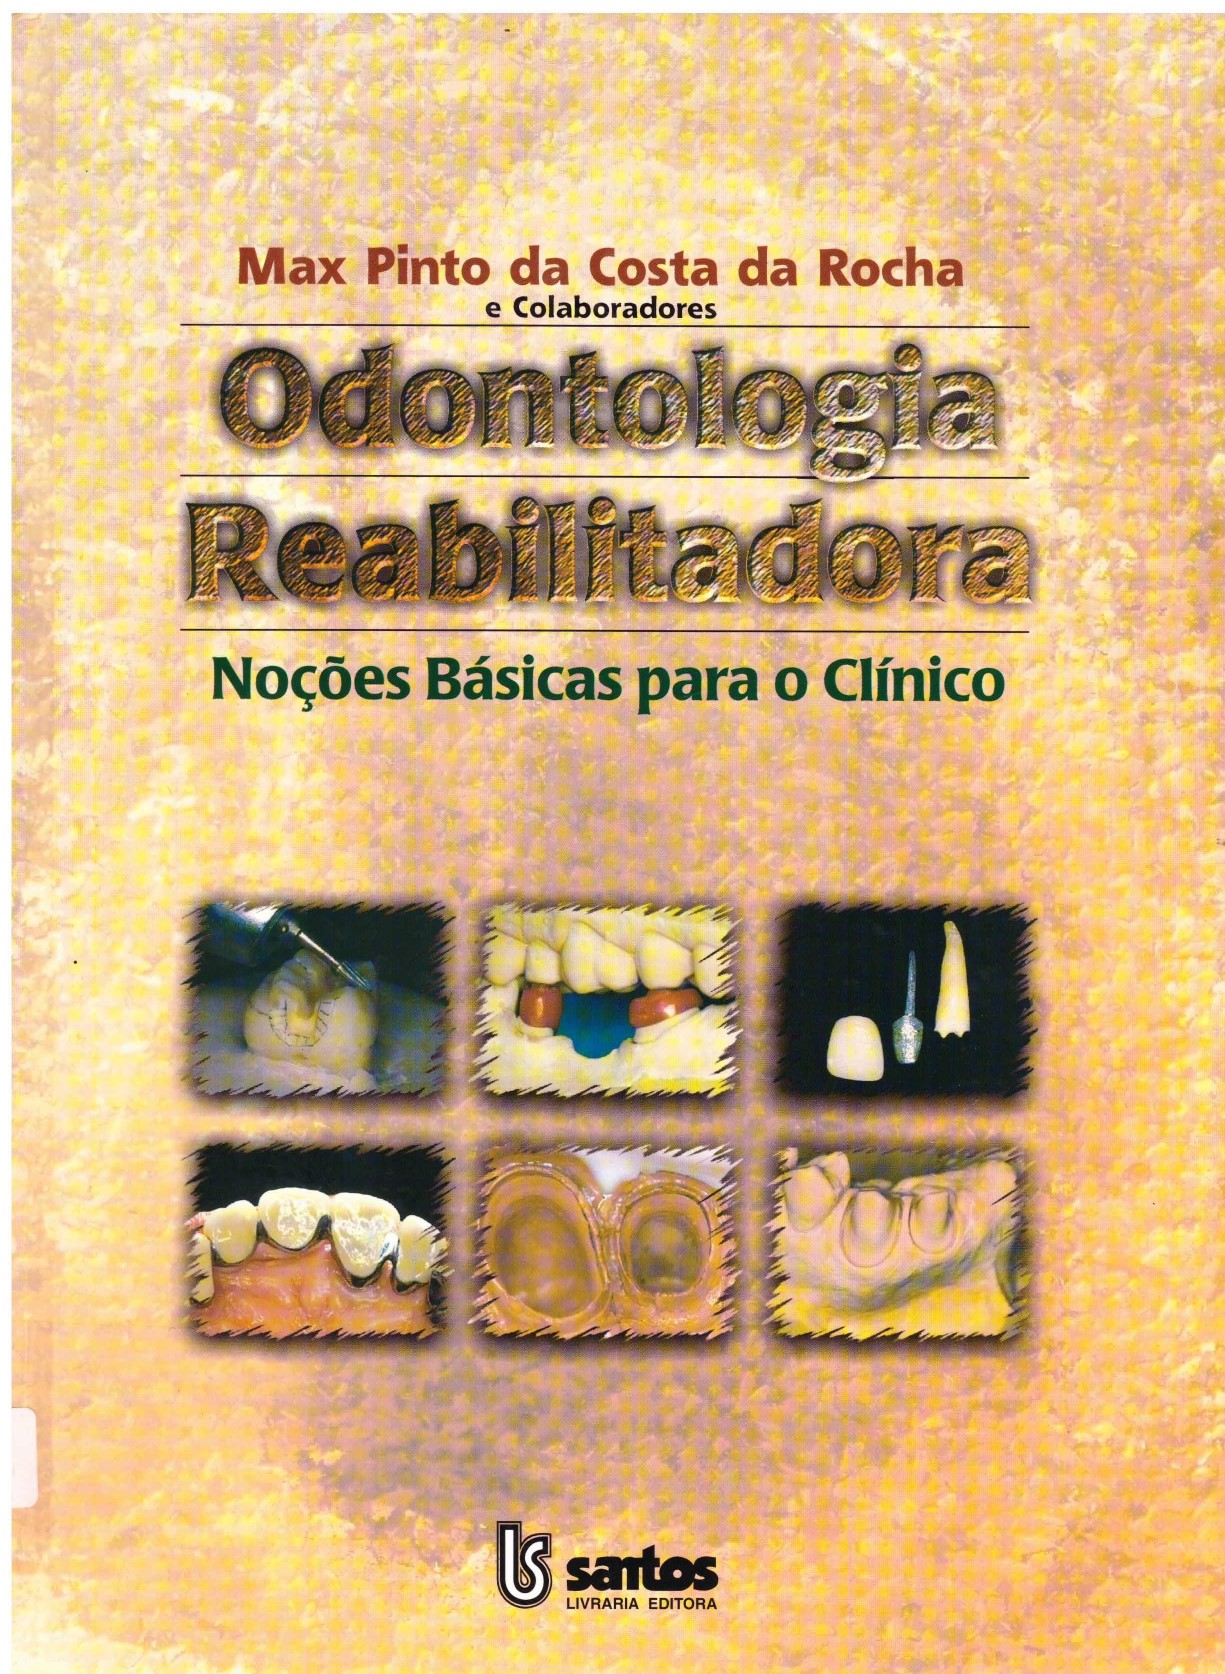 odontologia reabilitadora_page-0001